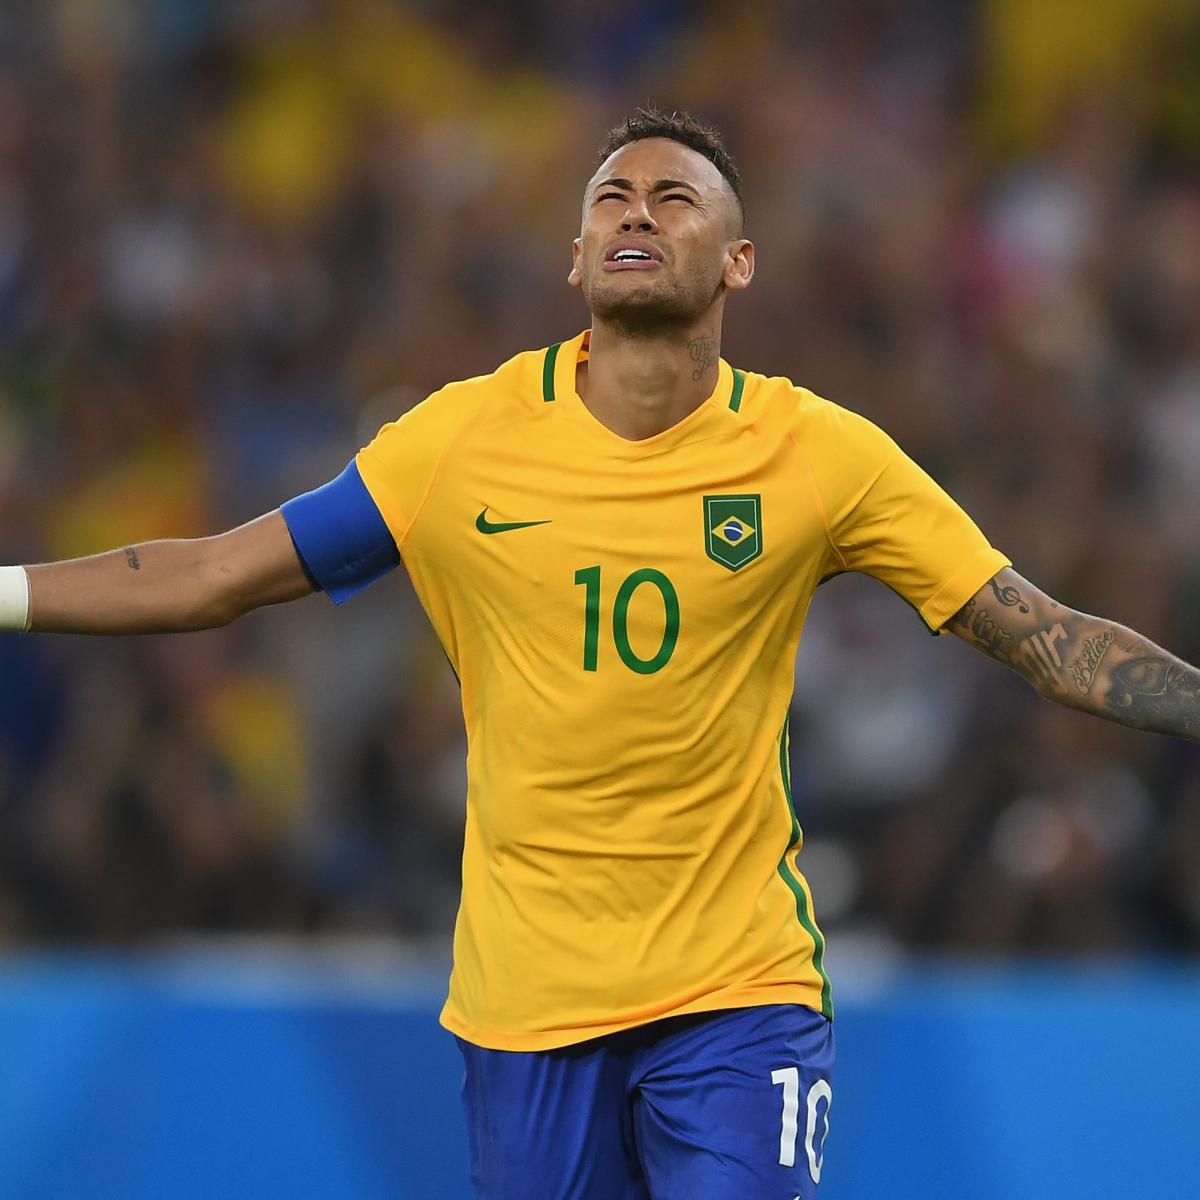 NIKE BRAZIL 2016 MENS HOME JERSEY - Soccer Plus